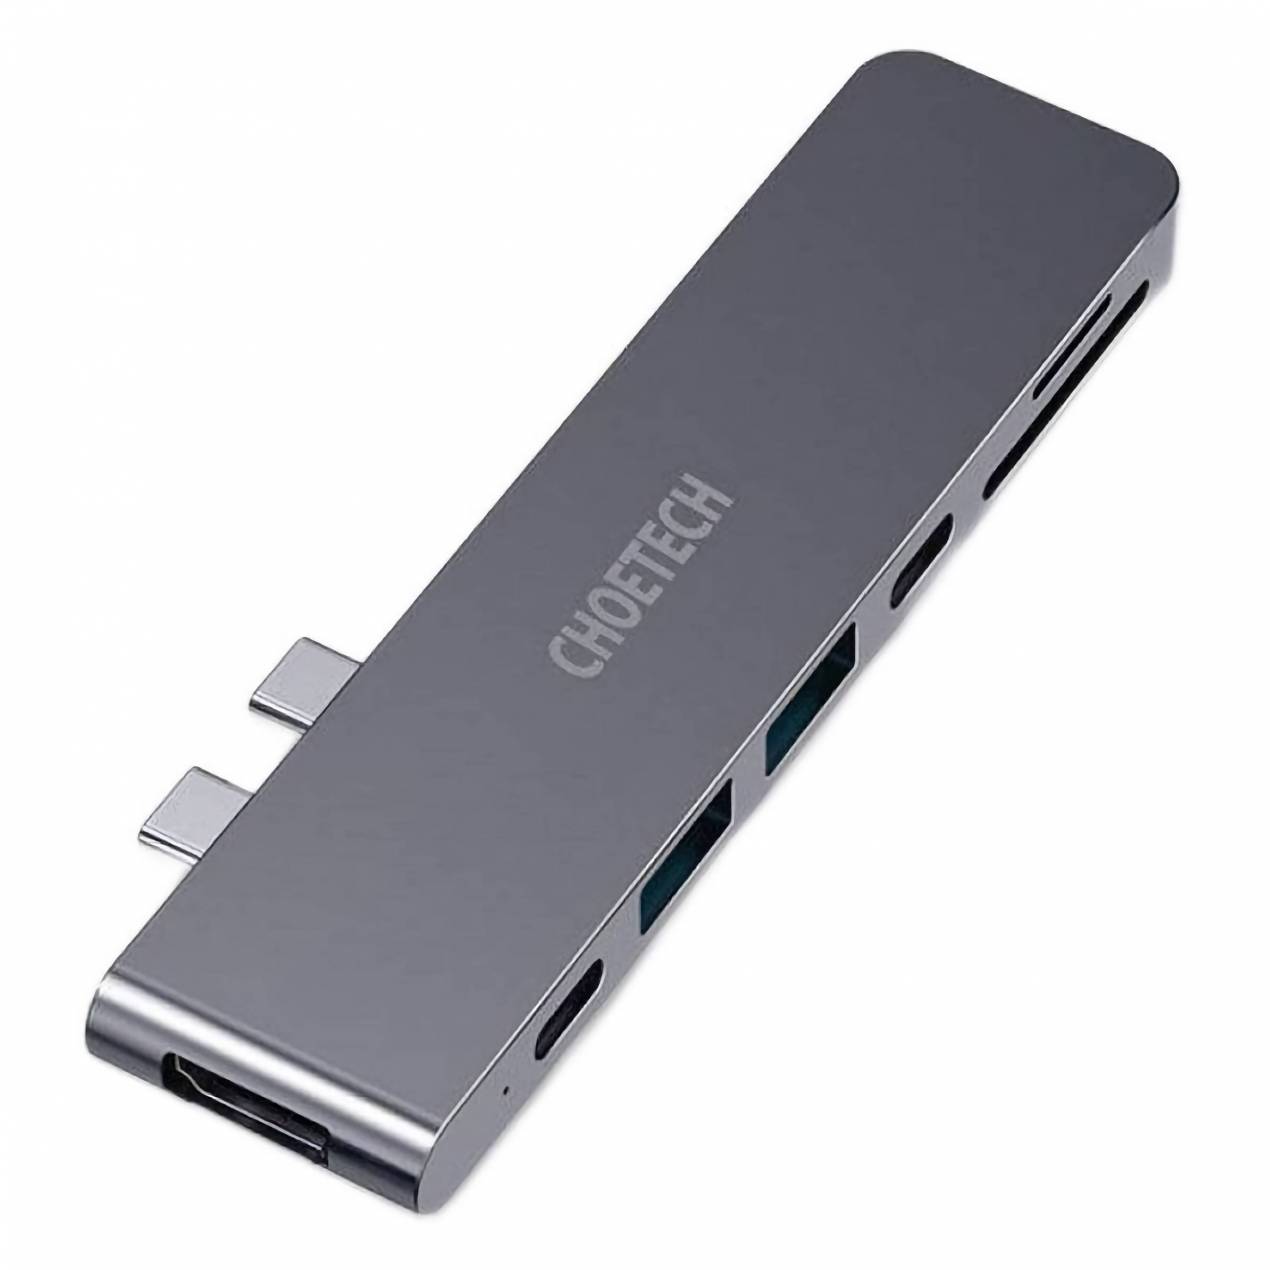 CHOETECH HUB-M14 7-IN-1 USB TYPE C HUB ADAPTER WITH 4K HDMI, 2 USB 3.0